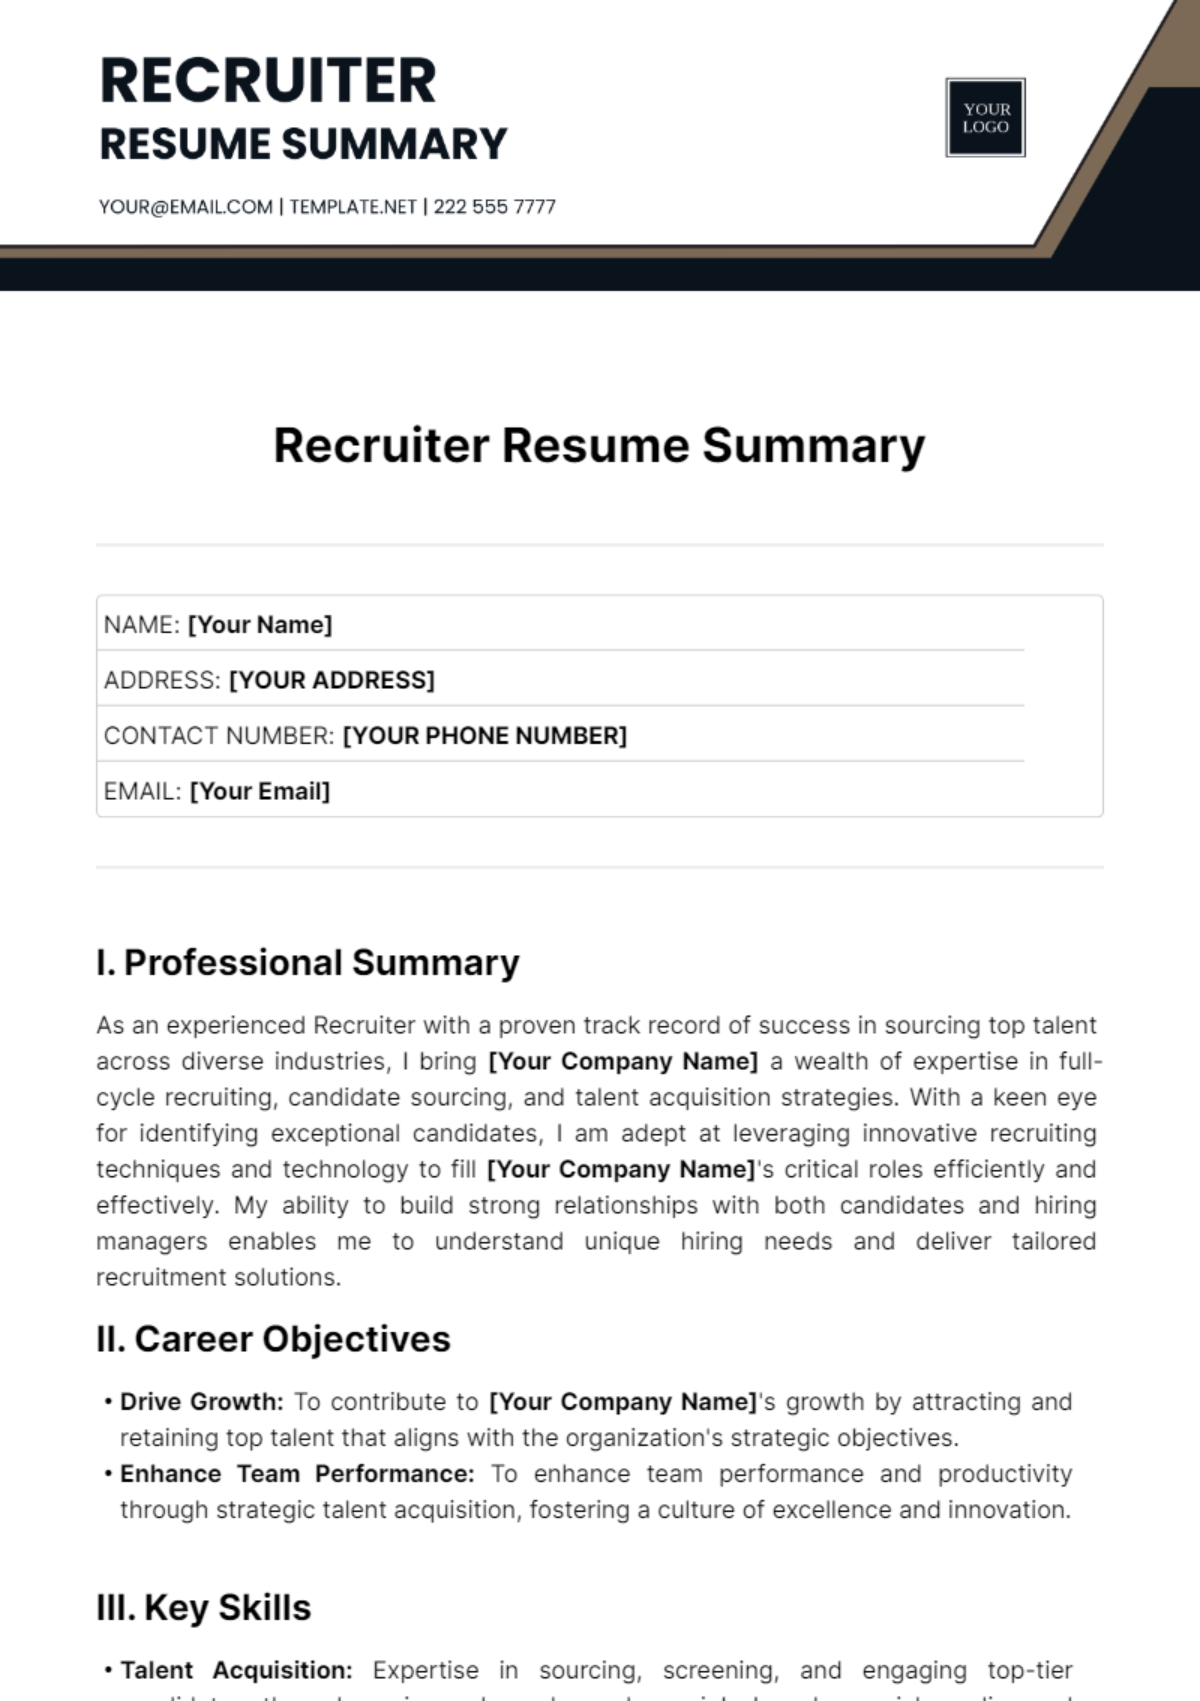 Recruiter Resume Summary Template